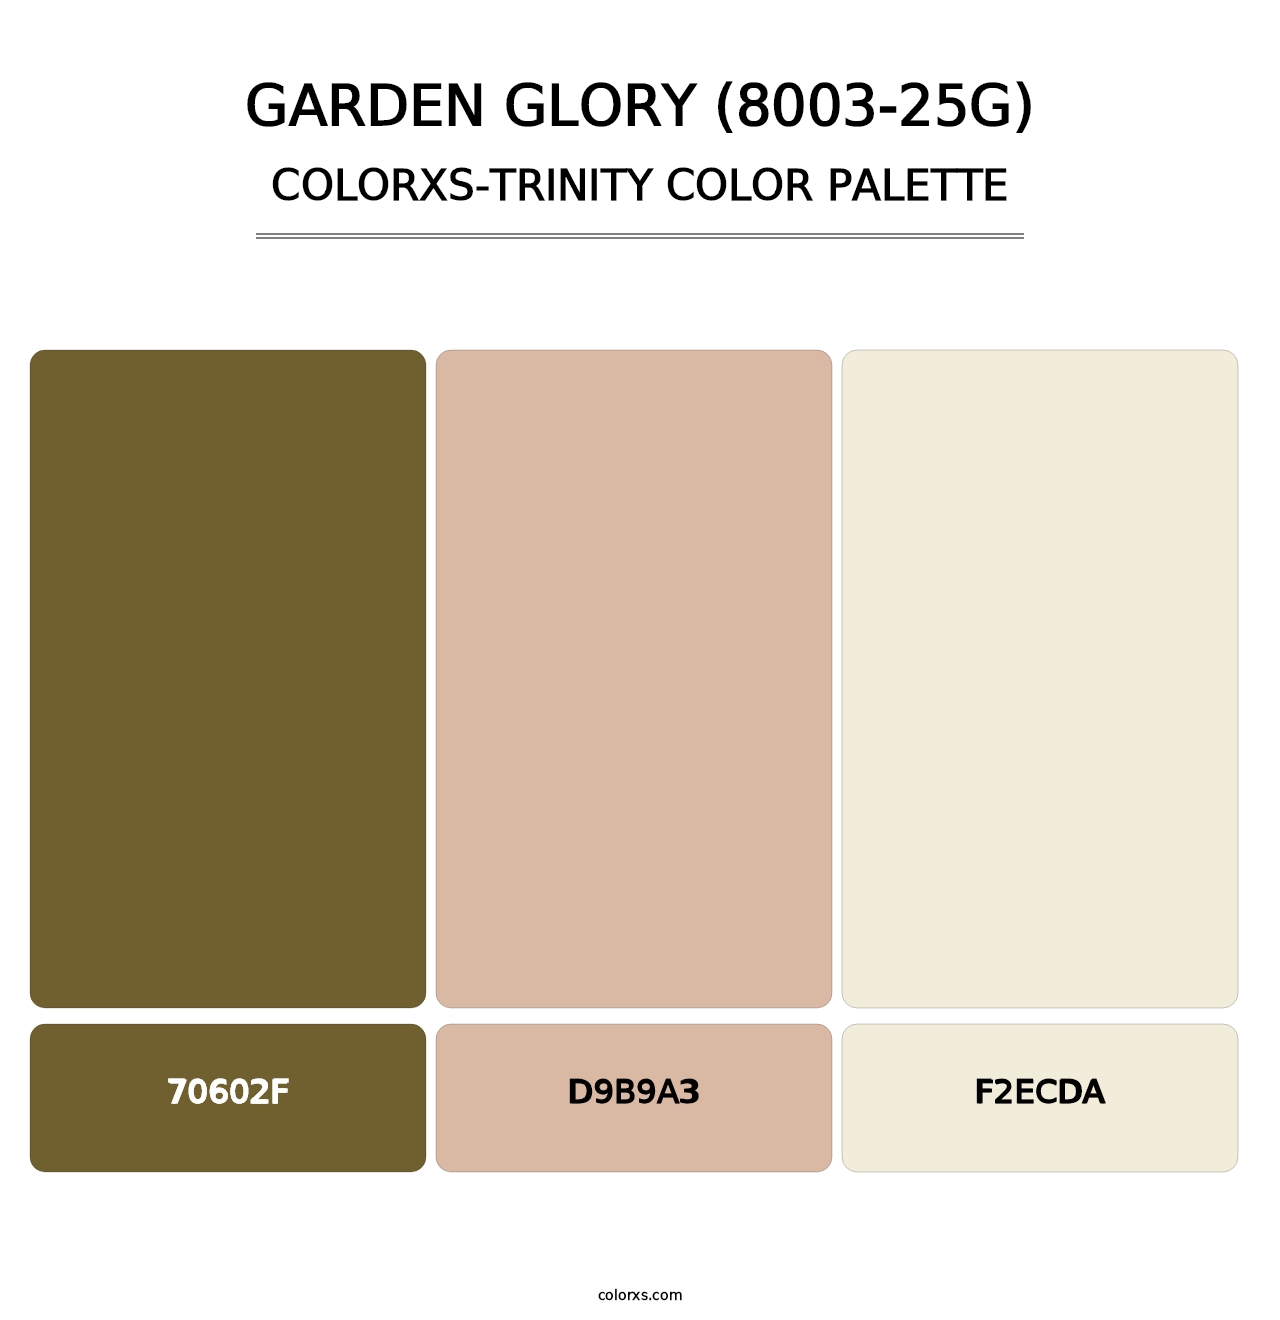 Garden Glory (8003-25G) - Colorxs Trinity Palette